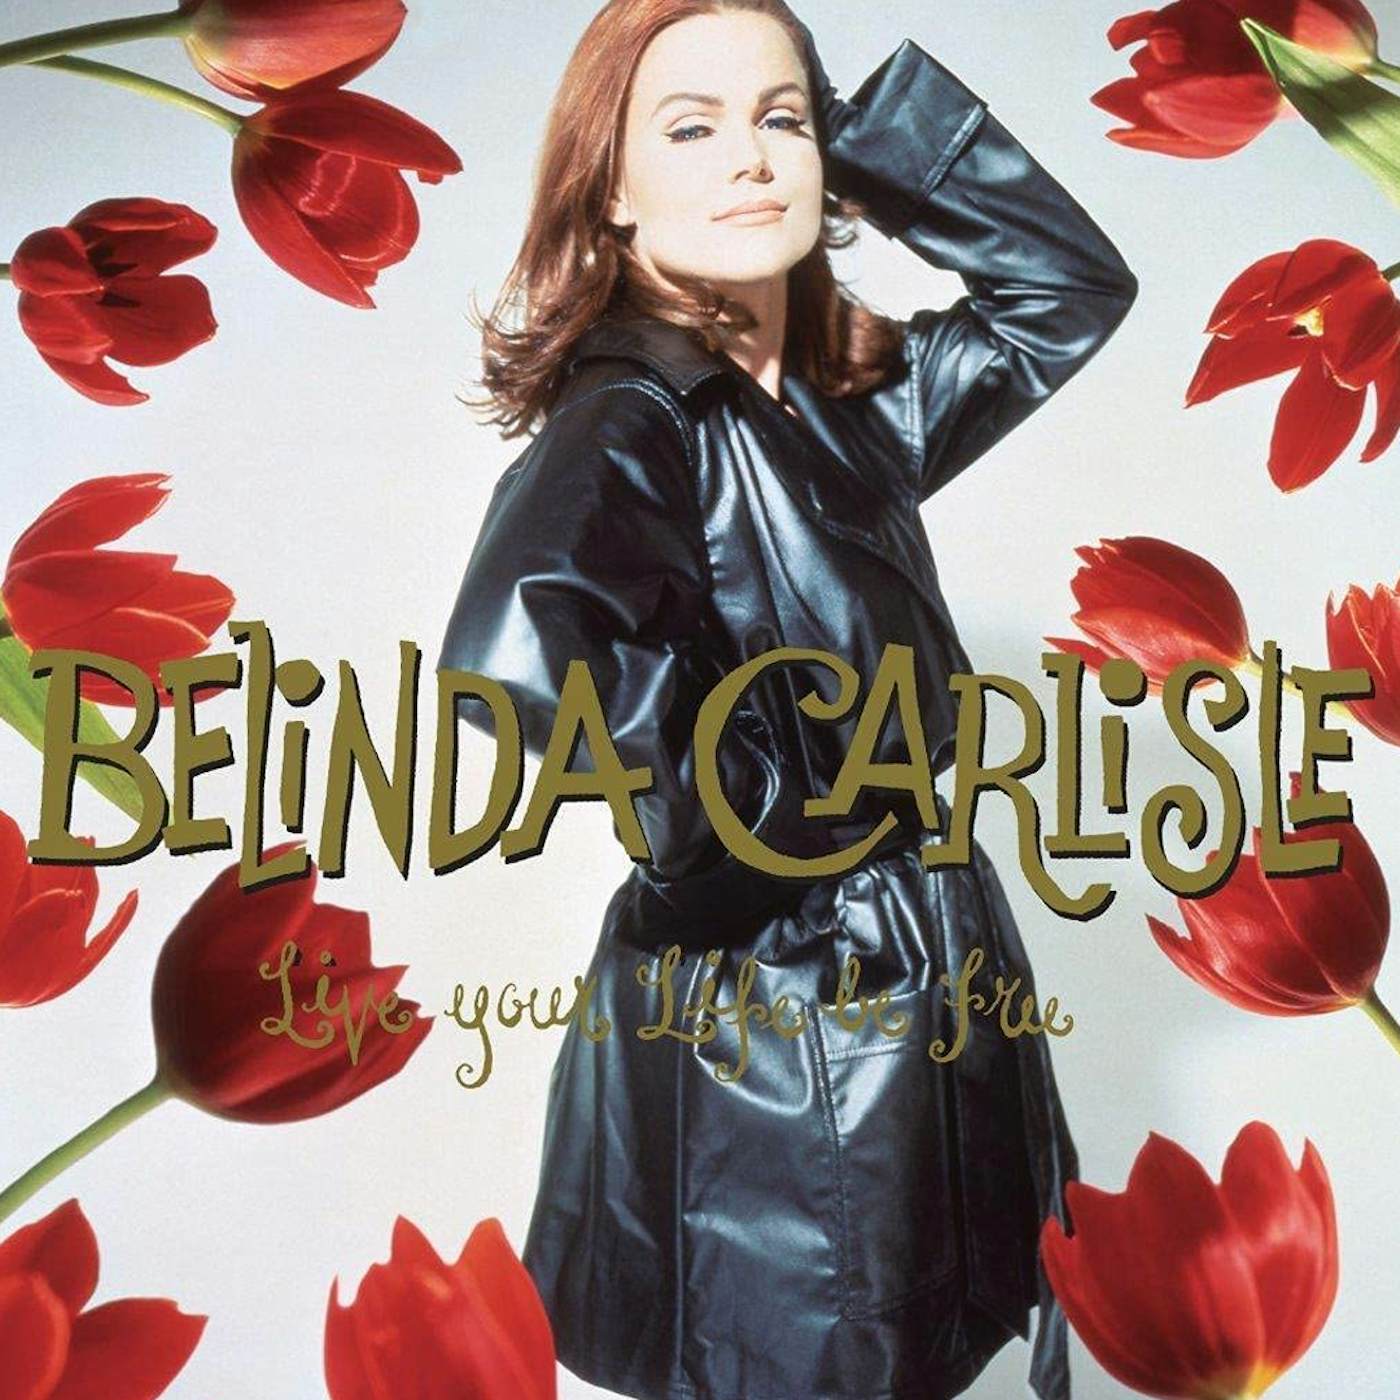 Belinda Carlisle LP Vinyl Record - Live Your Life Be Free - 30th